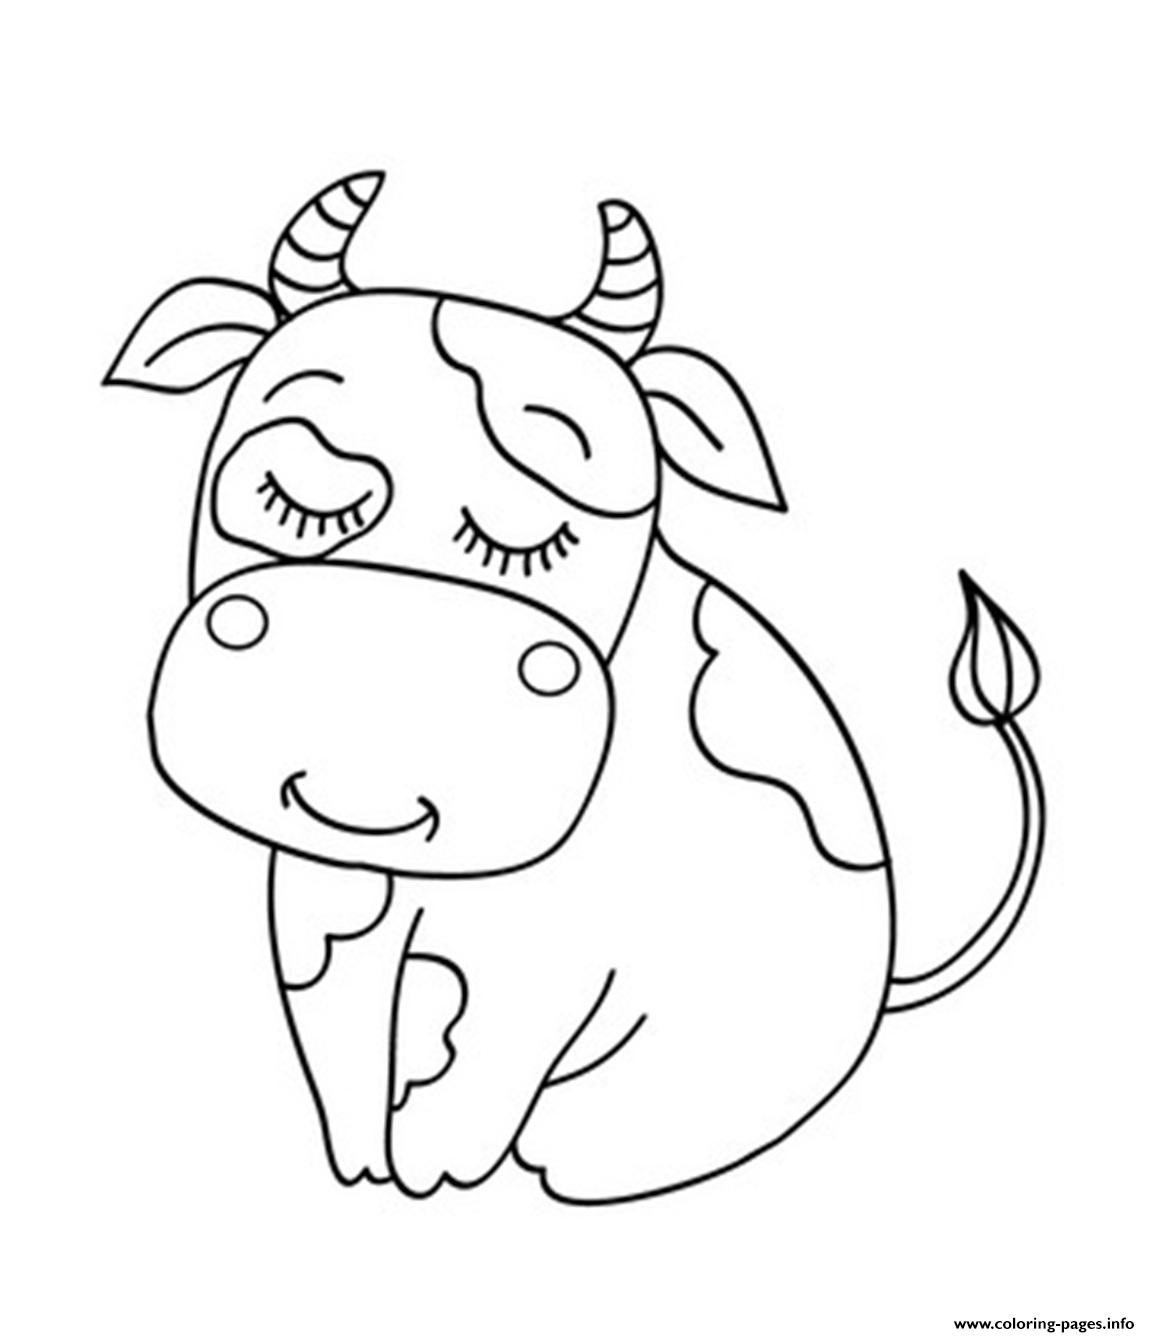 Cow S Cutie Animaldc7e coloring